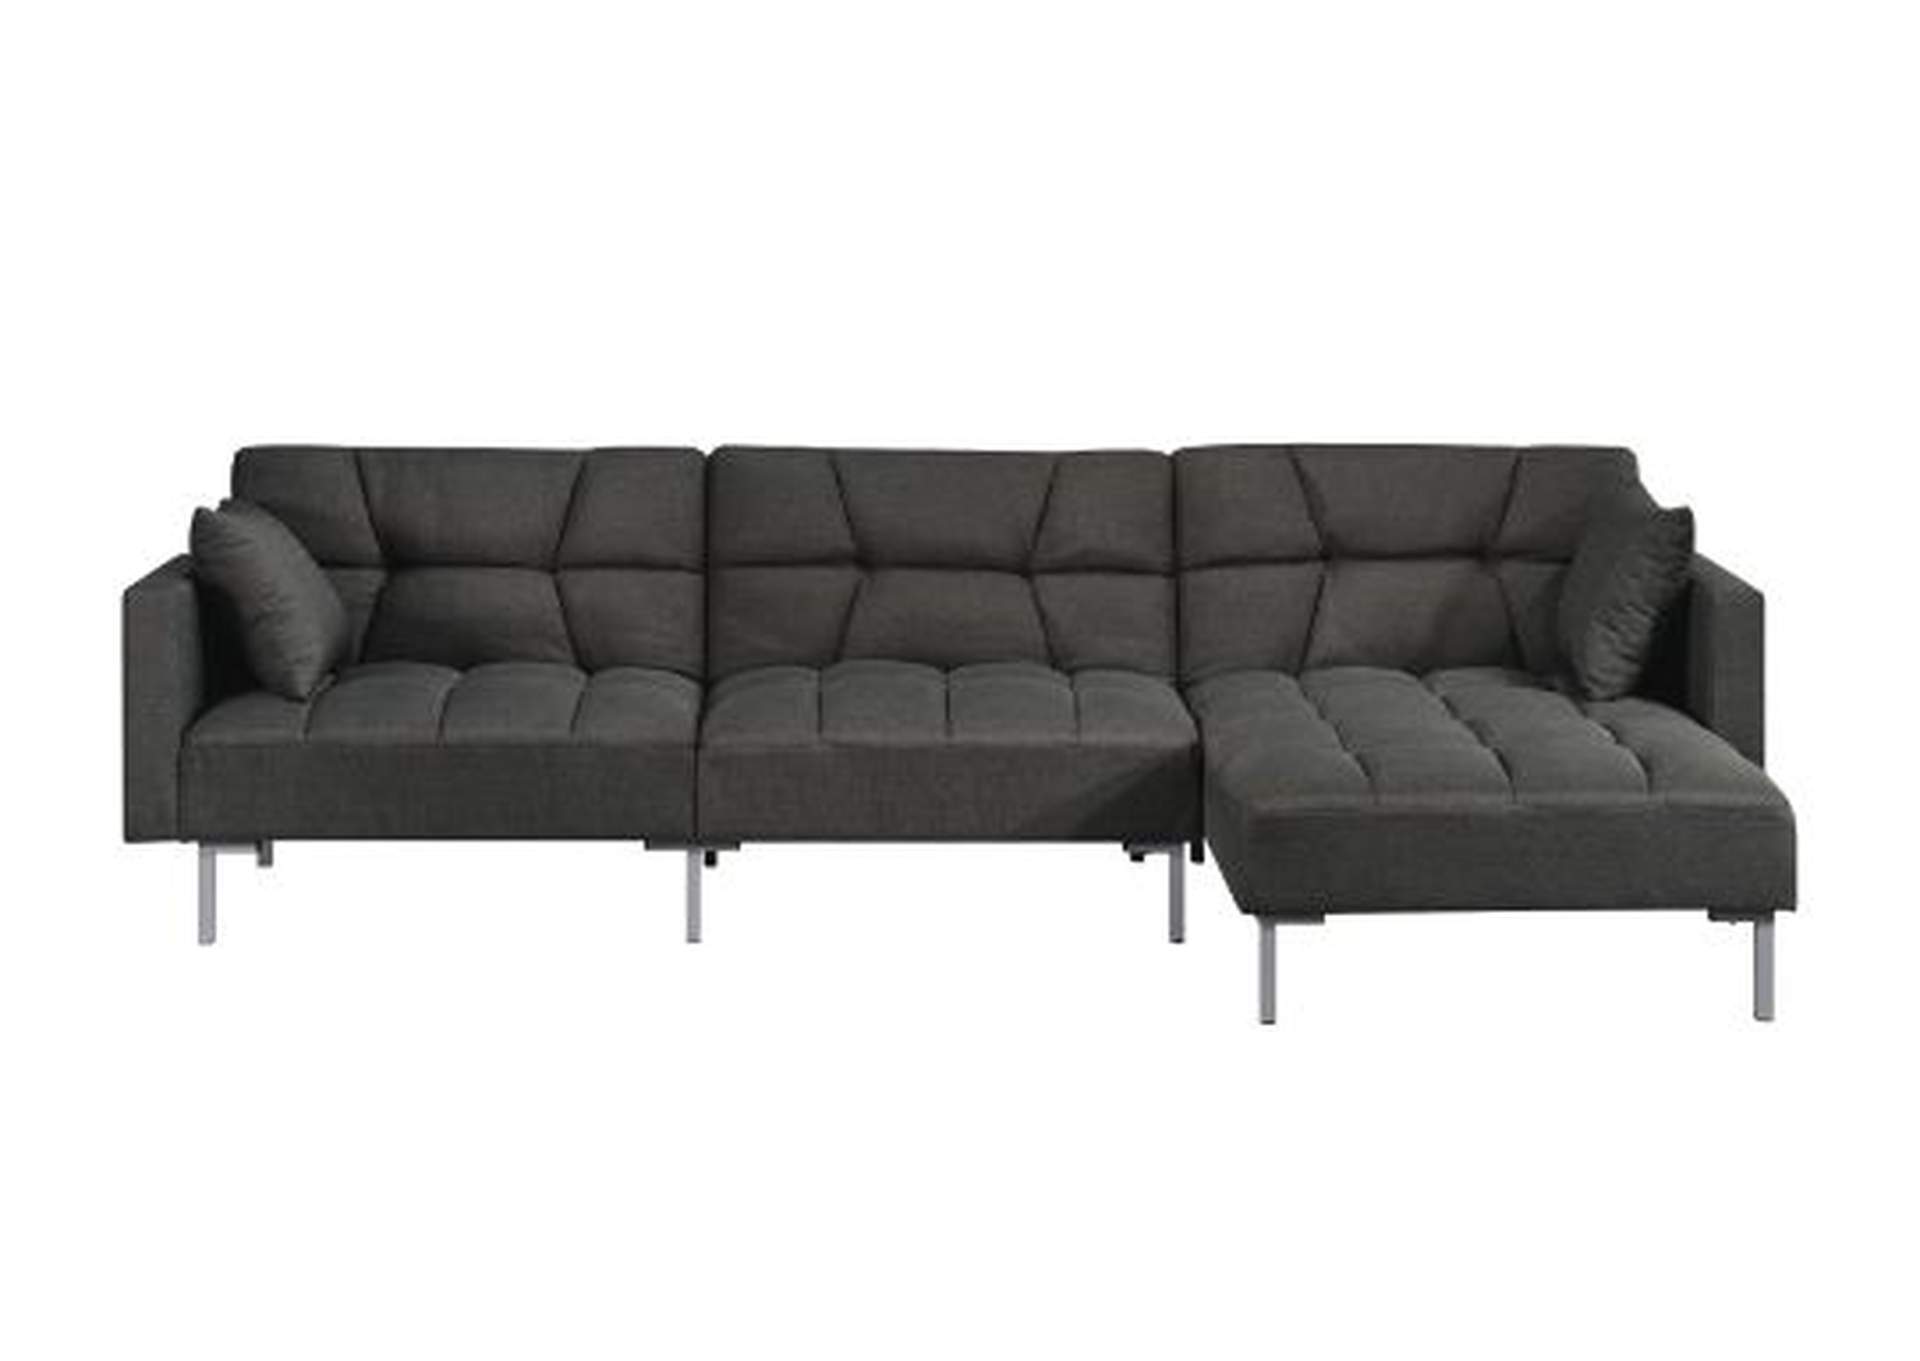 Duzzy Dark Gray Fabric Sectional Sofa,Acme